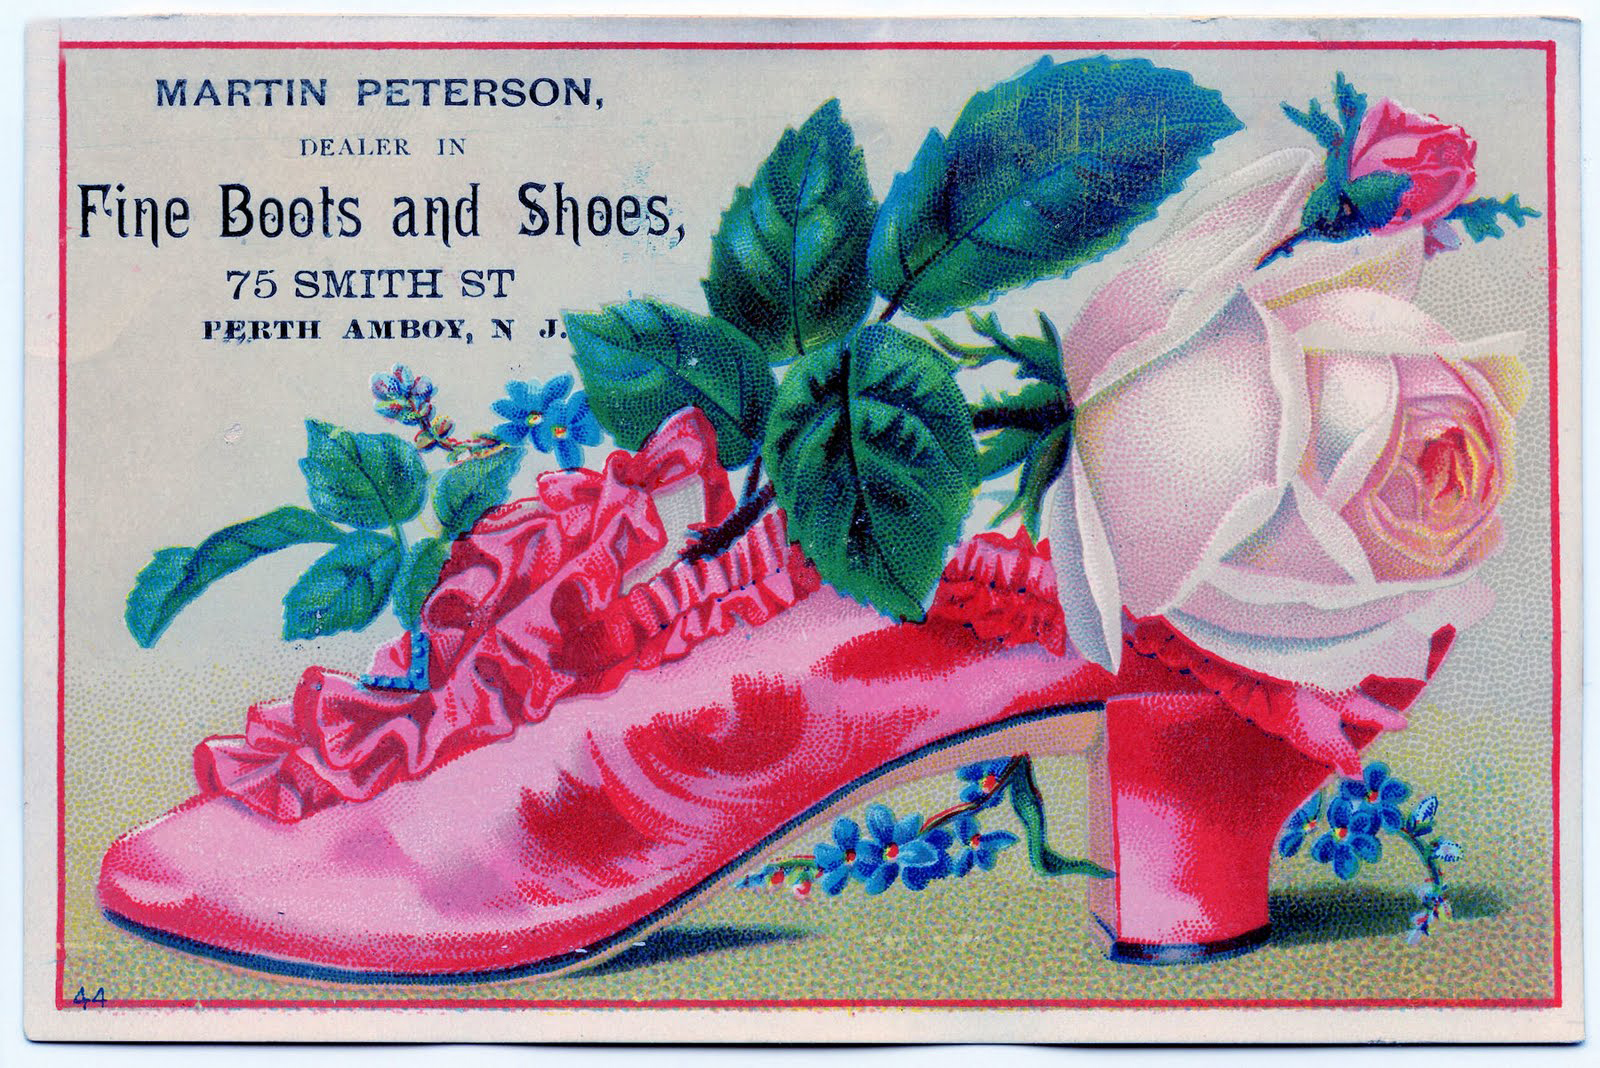 8 Vintage Flower Shoe Images! - The 